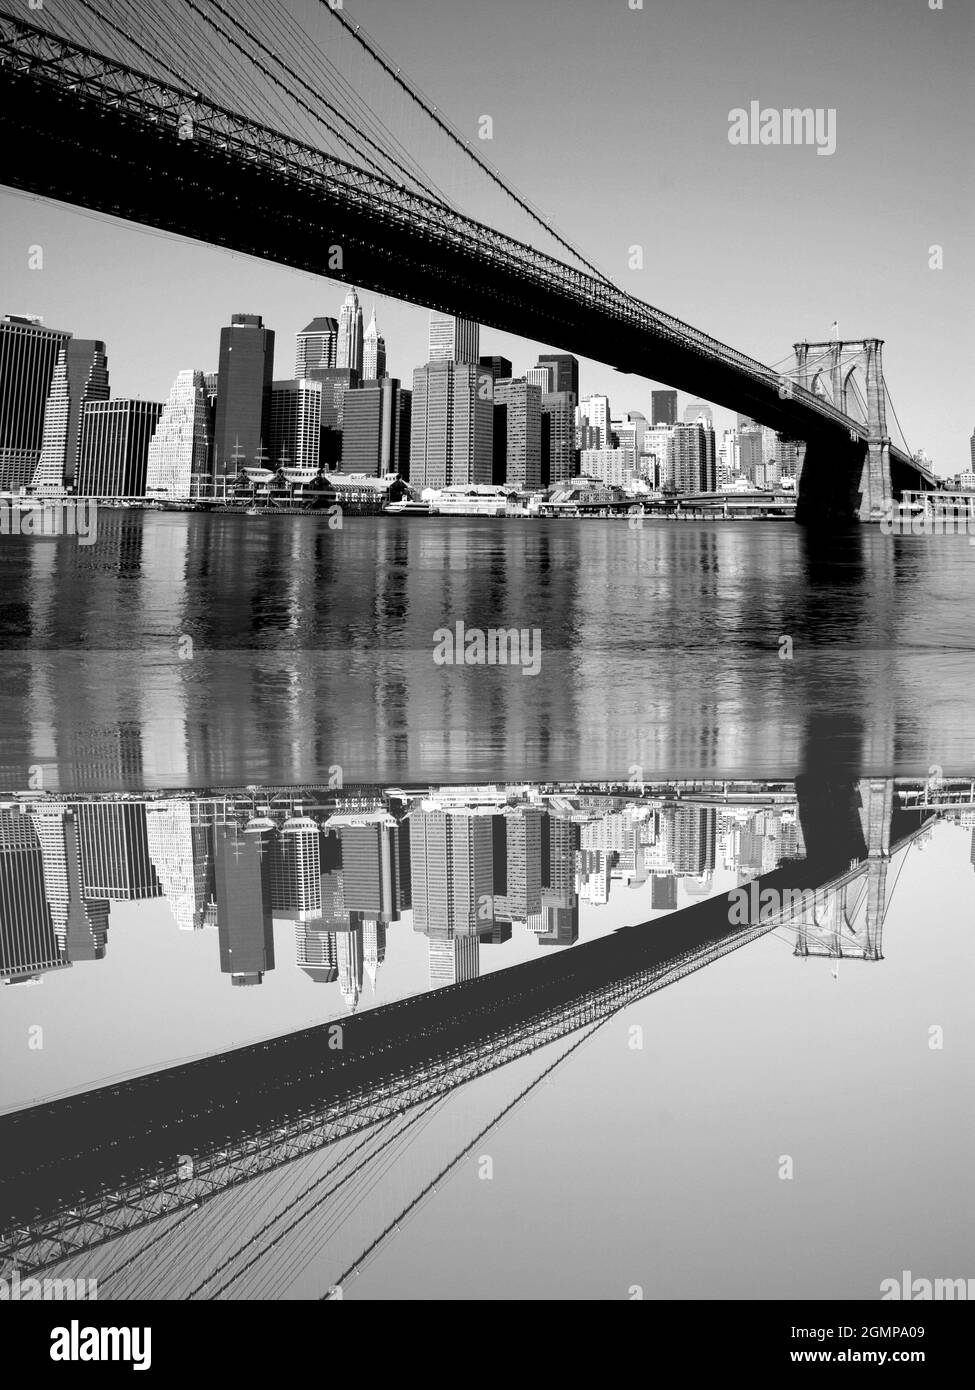 Brooklyn Bridge and Lower Manhattan skyline along the East River. Stock Photo